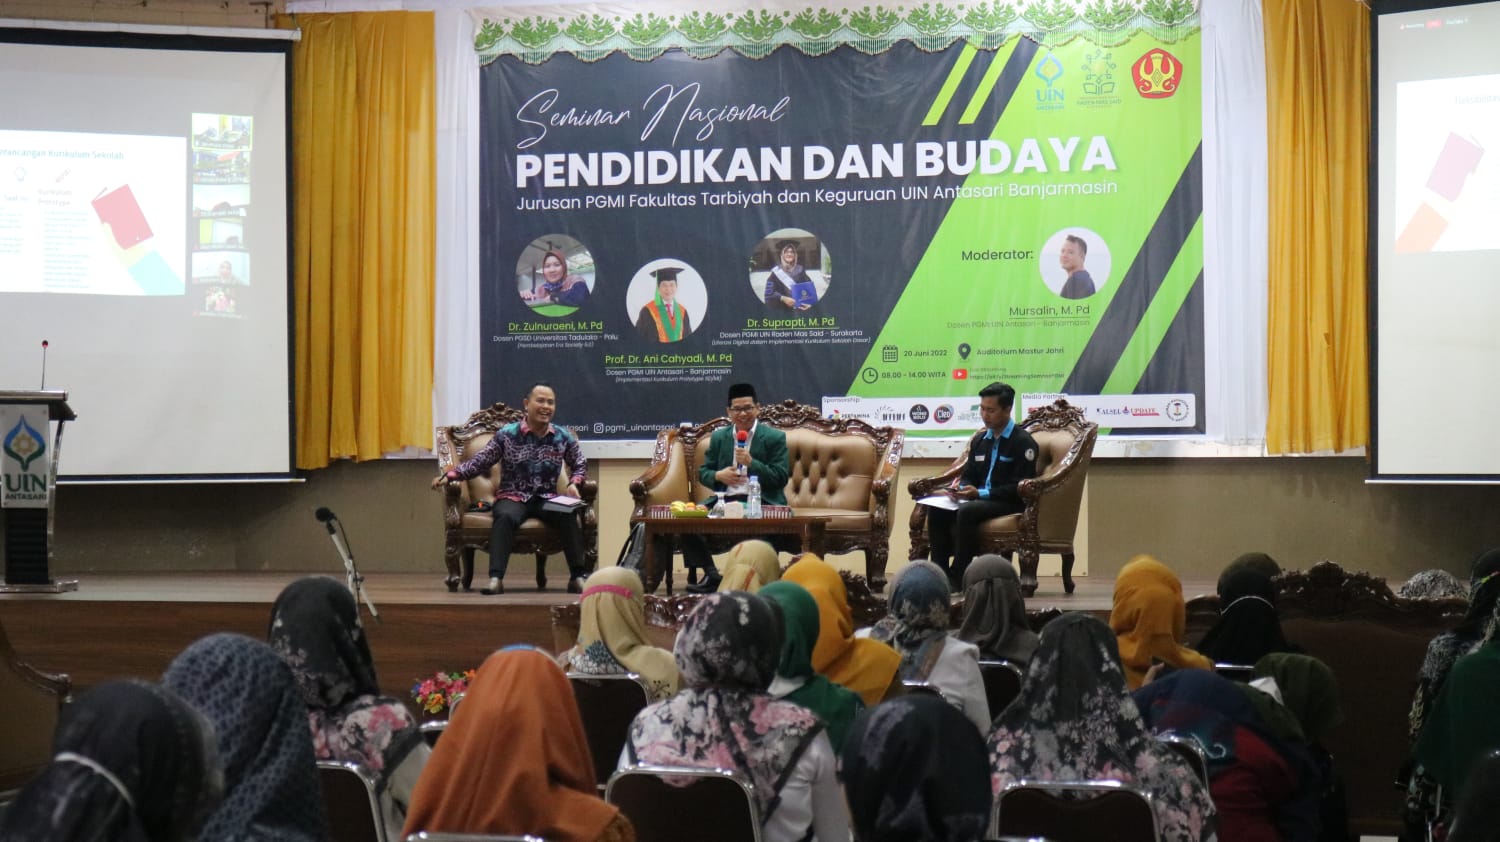 Seminar Nasional Pendidikan dan Budaya oleh Jurusan PGMI UIN Antasari Banjarmasin. (Foto: Istimewa)